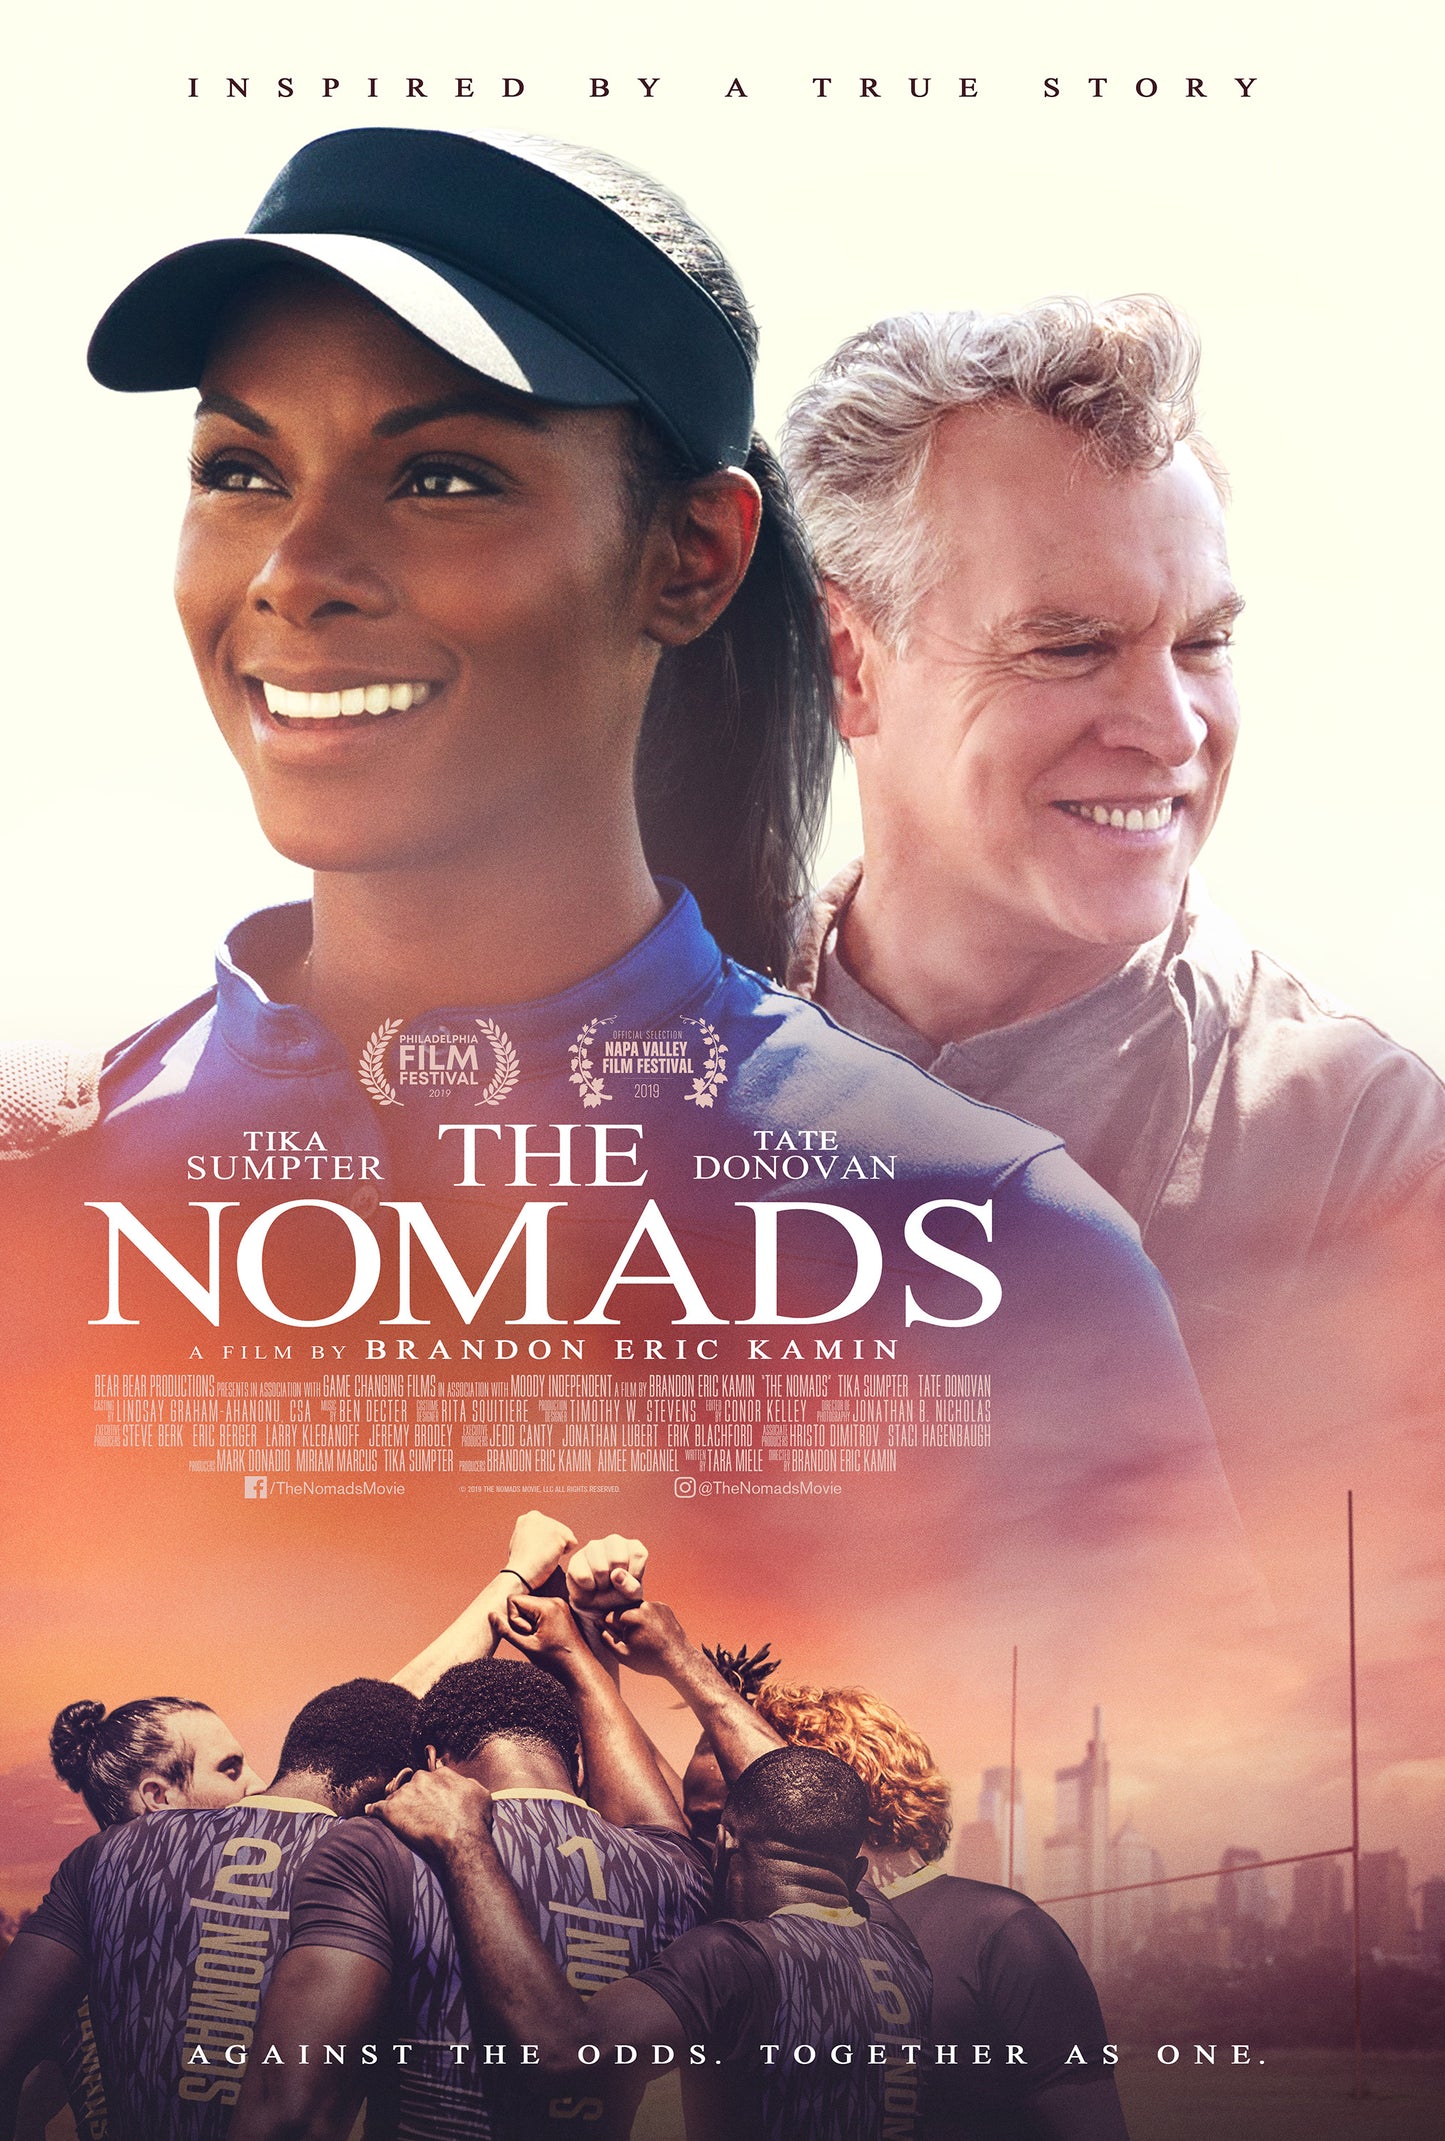 Nomads cover art